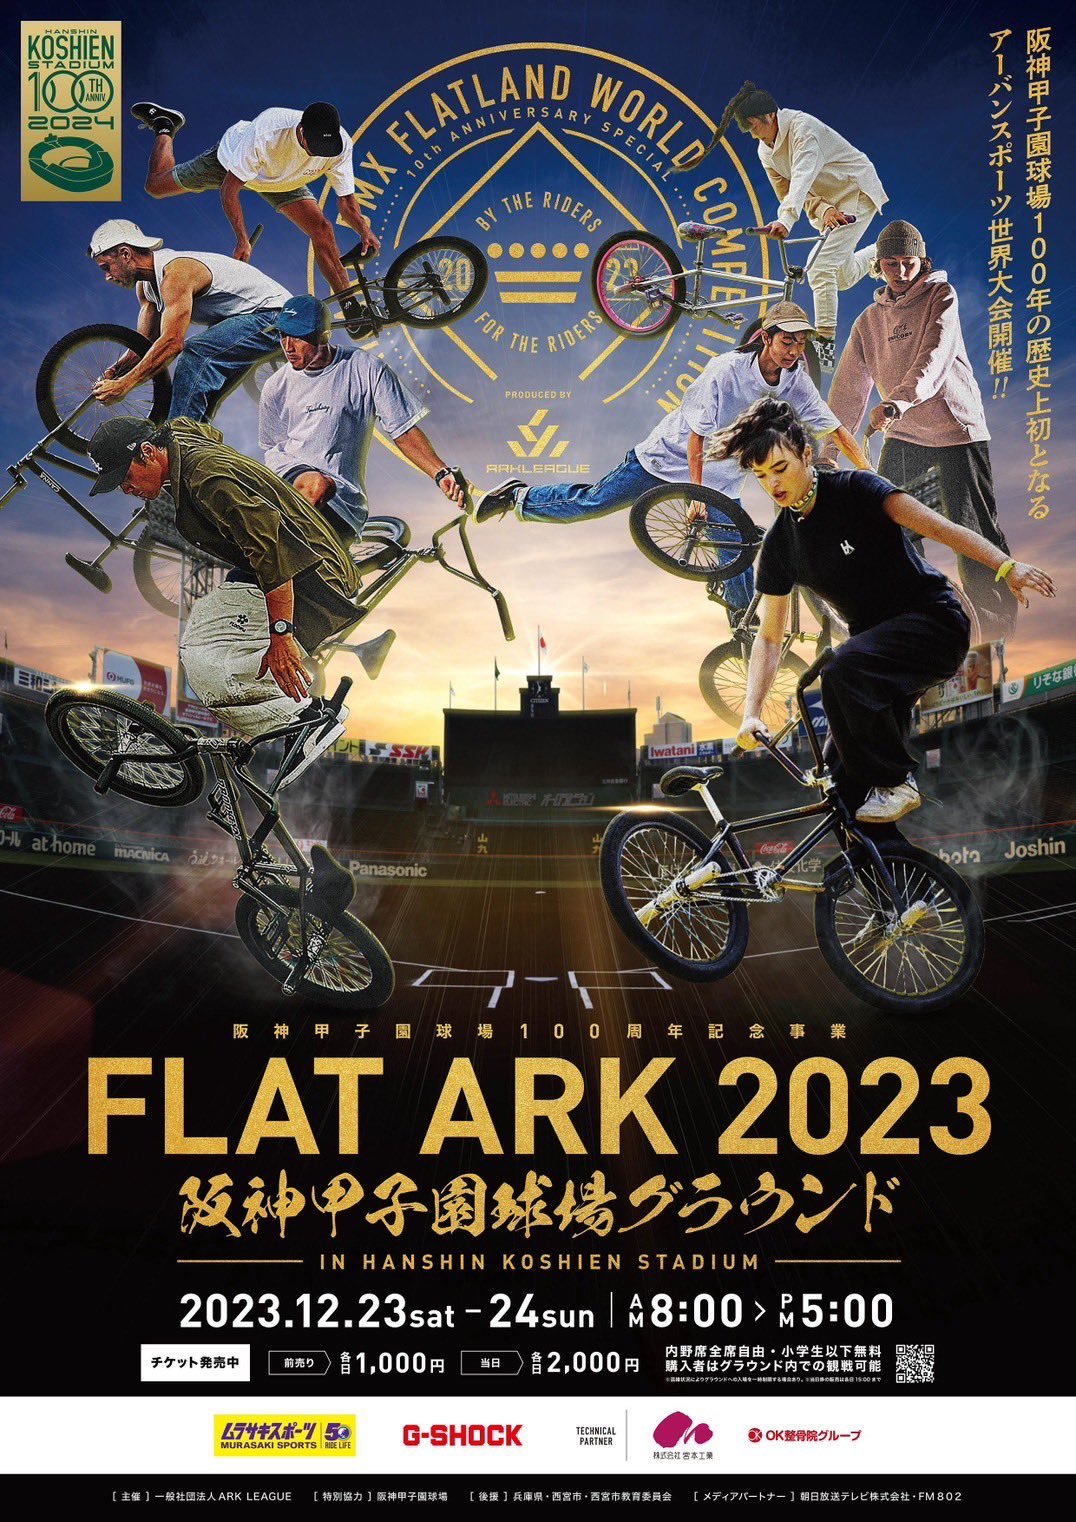 『FLAT ARK 2023 in 阪神甲子園球場』で競技終了後にET-KINGらが音楽ライブを開催